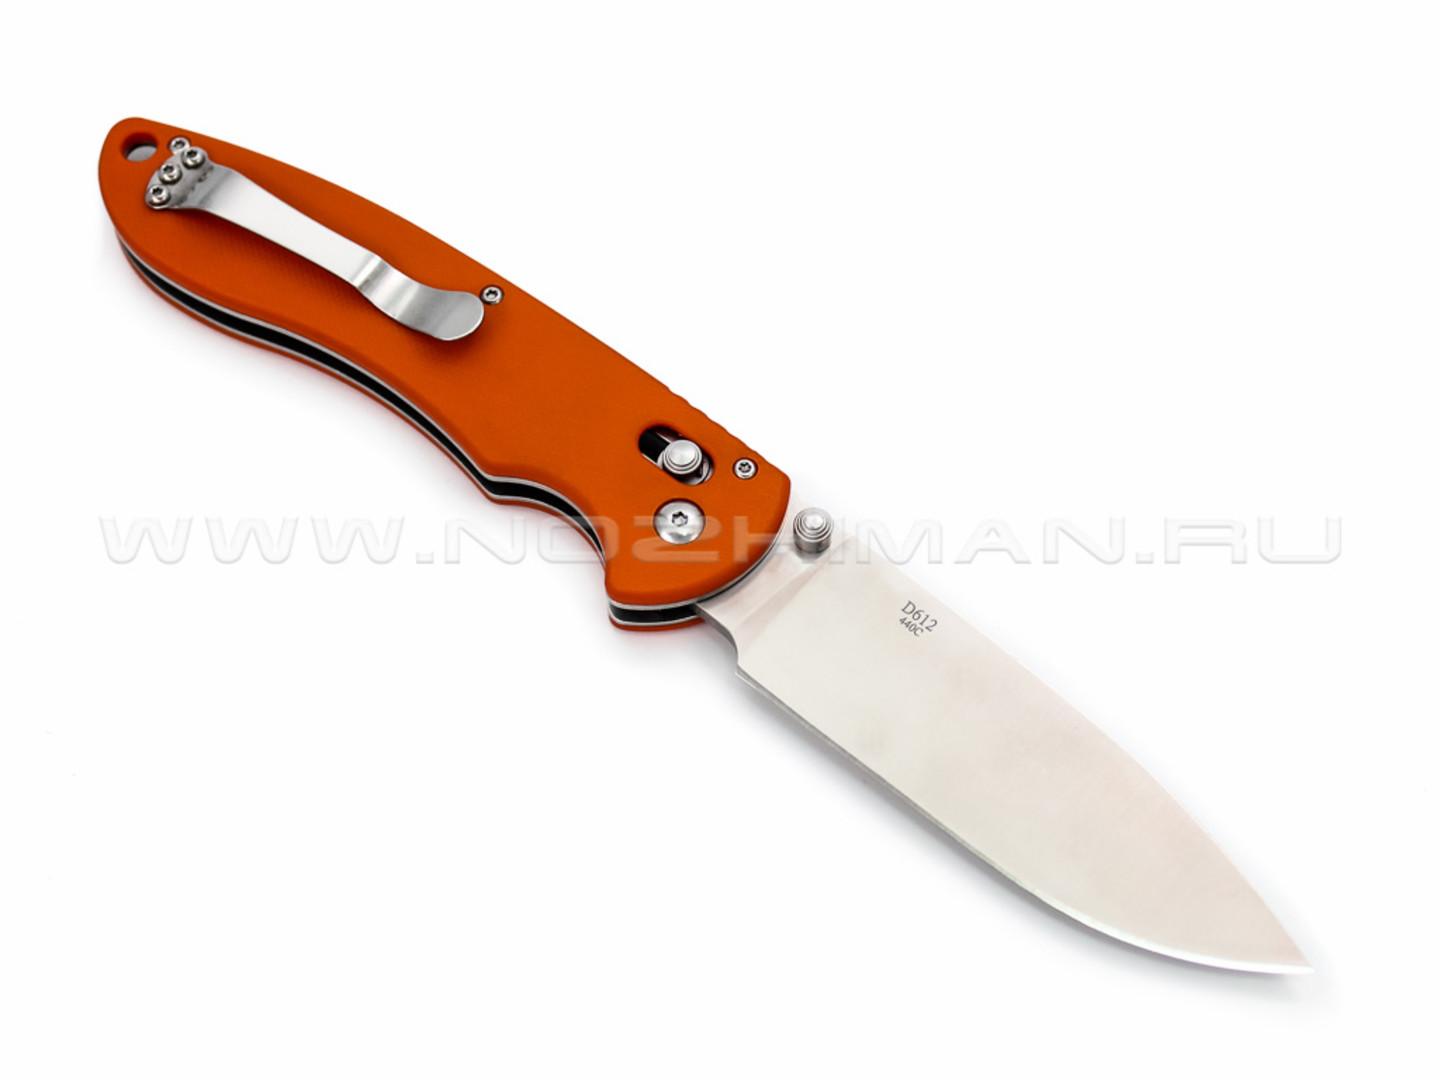 Нож Daoke "D612" orange 440C